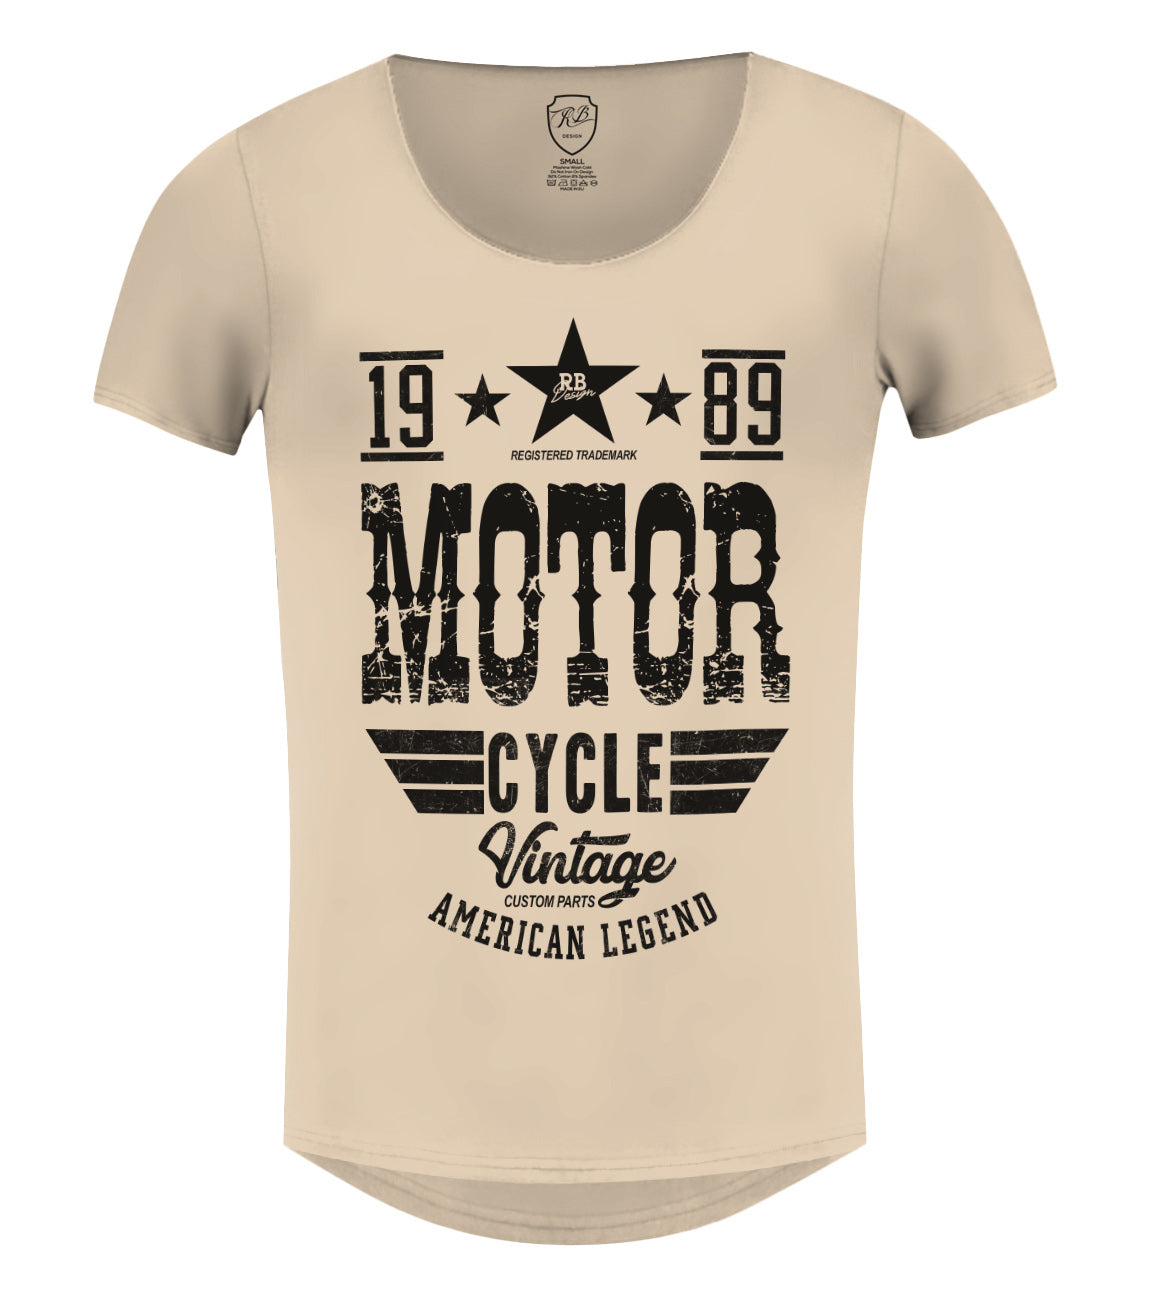 motorcycle mens shirts beige